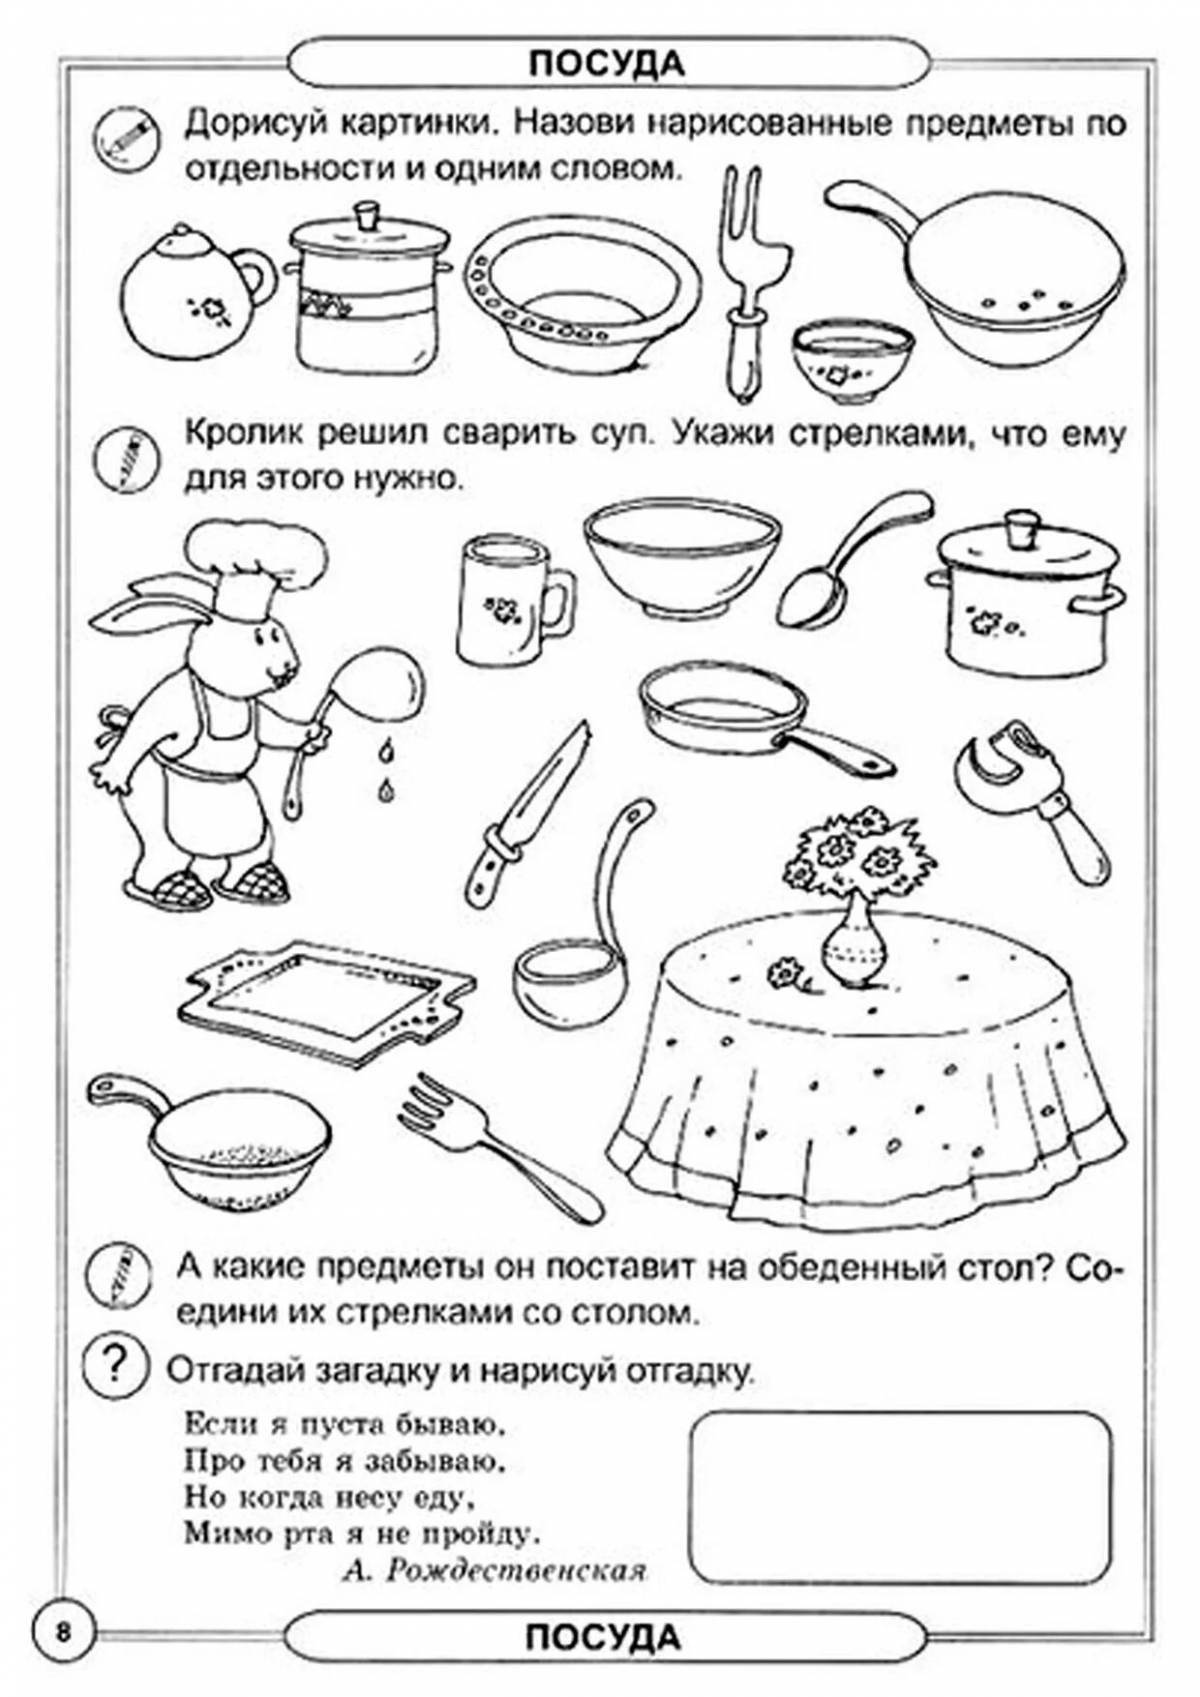 Playful tableware coloring book for preschoolers